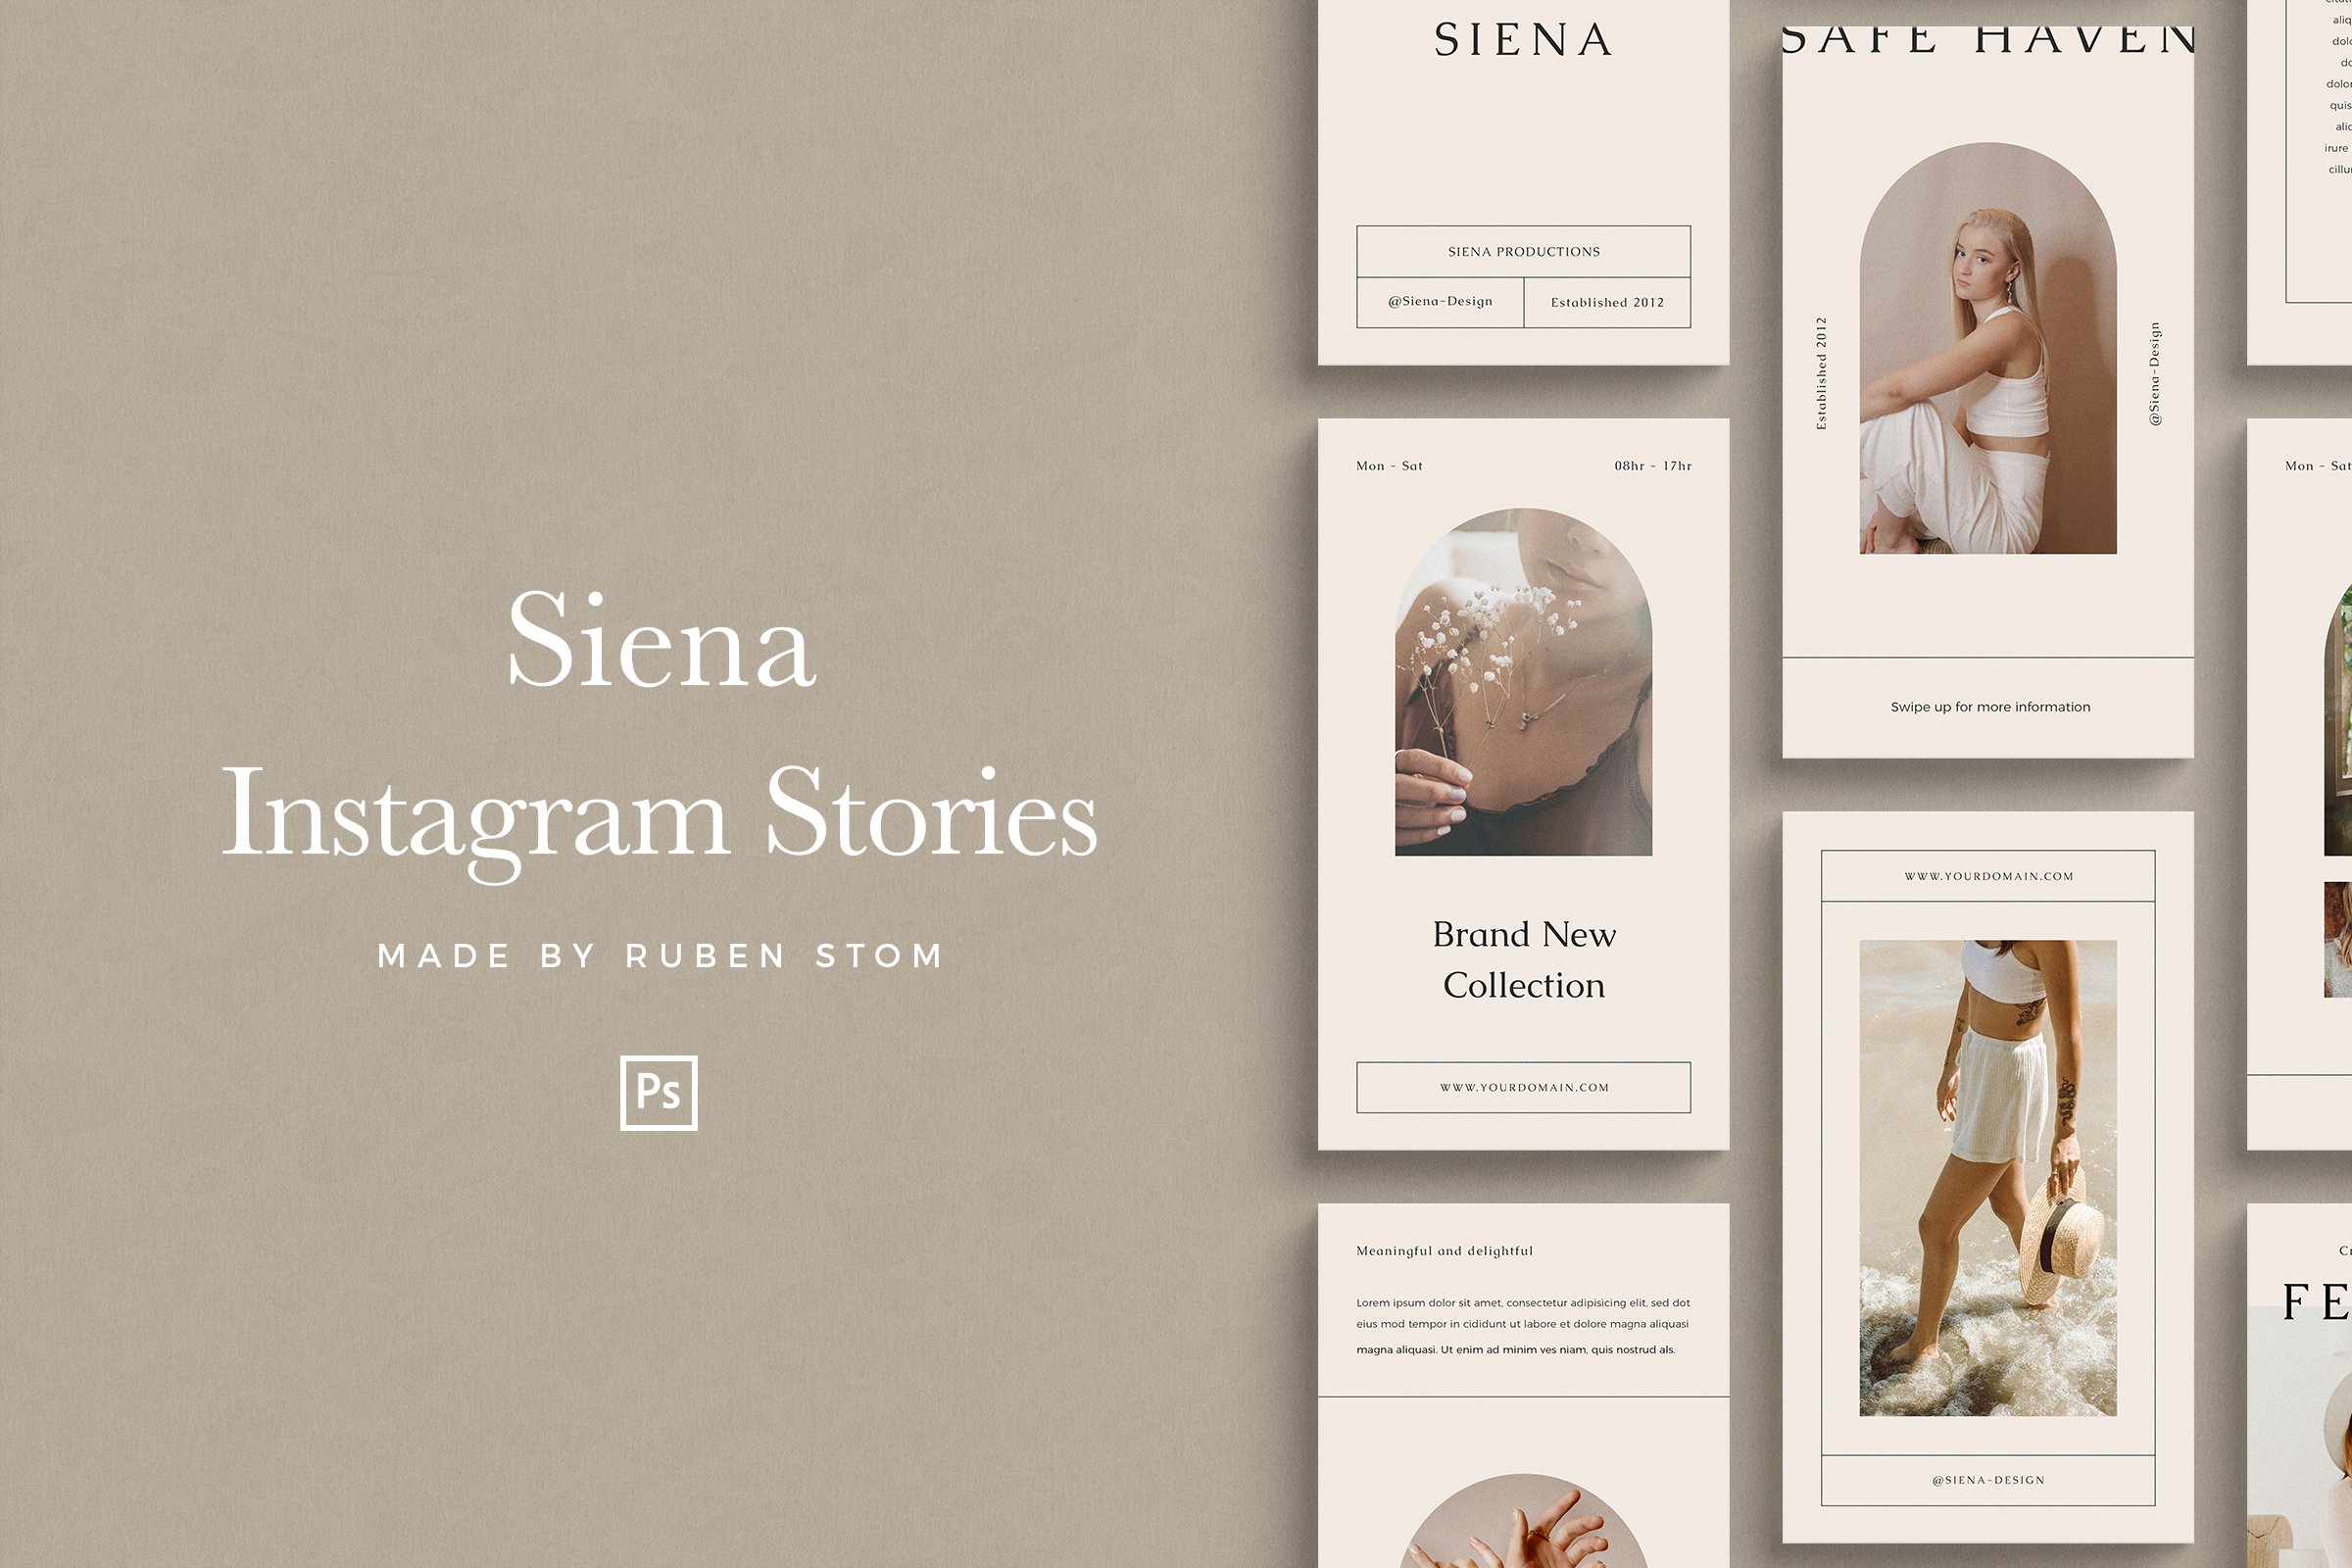 Siena Instagram Stories cover image.